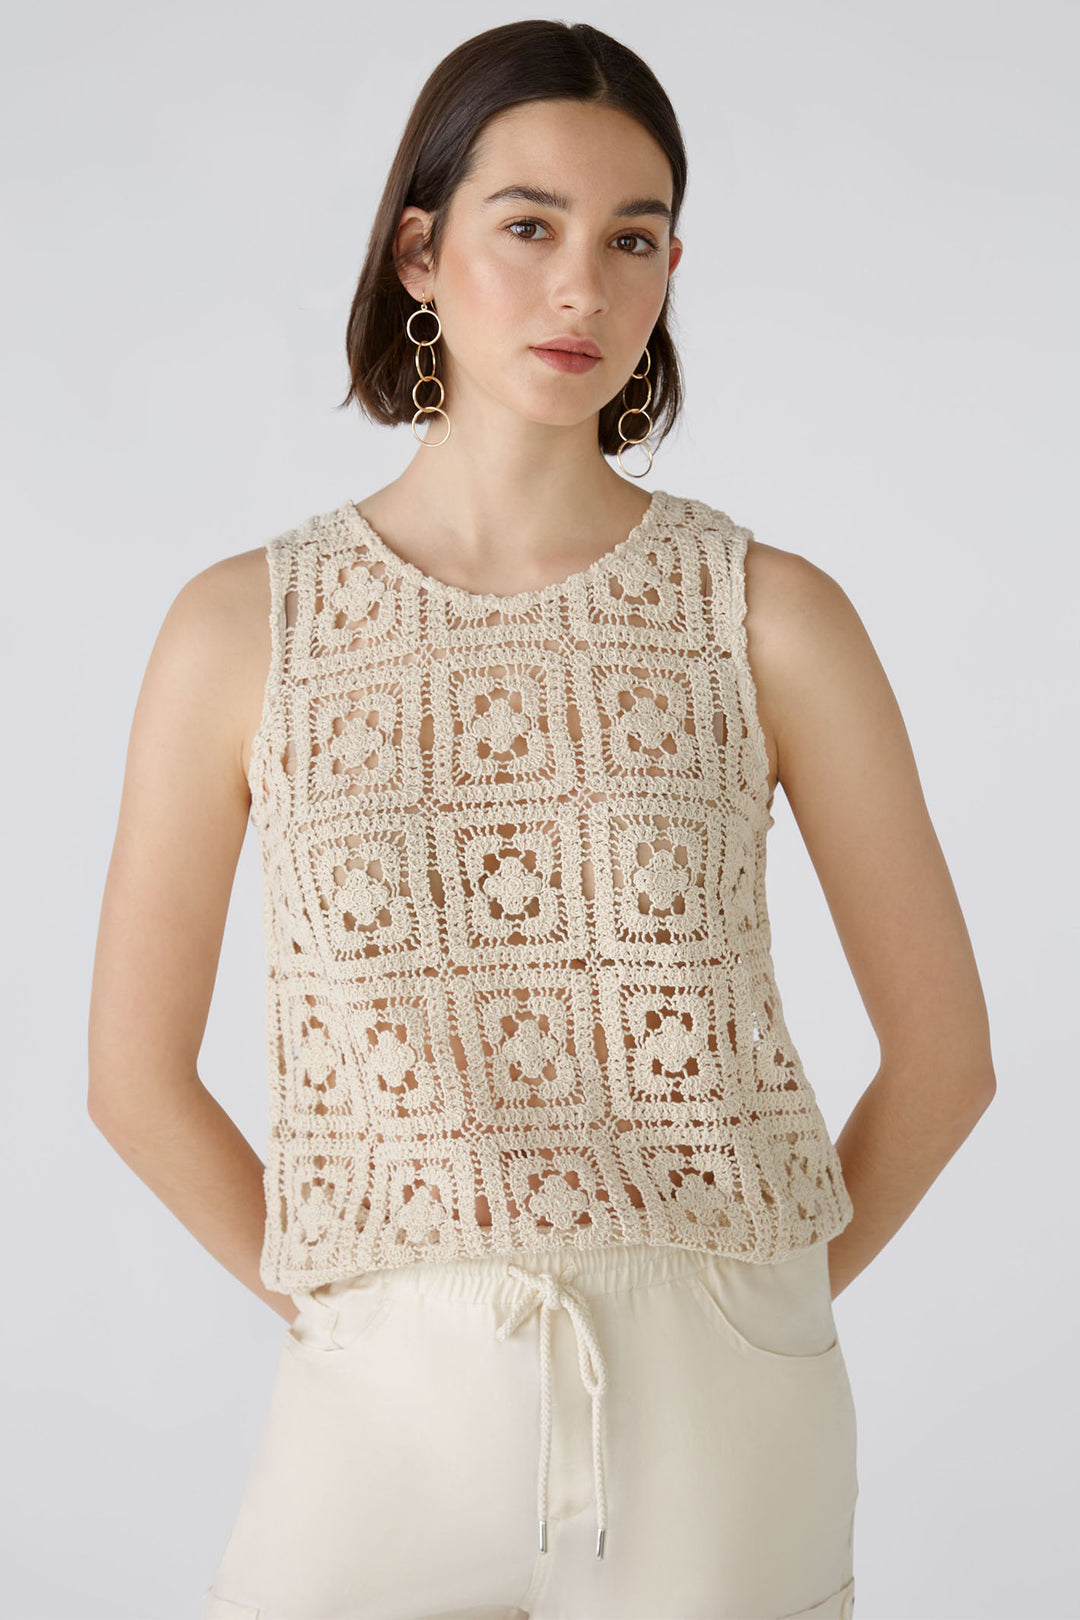 Oui 87909 Sandshell Beige Crochet Style Sleeveless Top - Olivia Grace Fashion